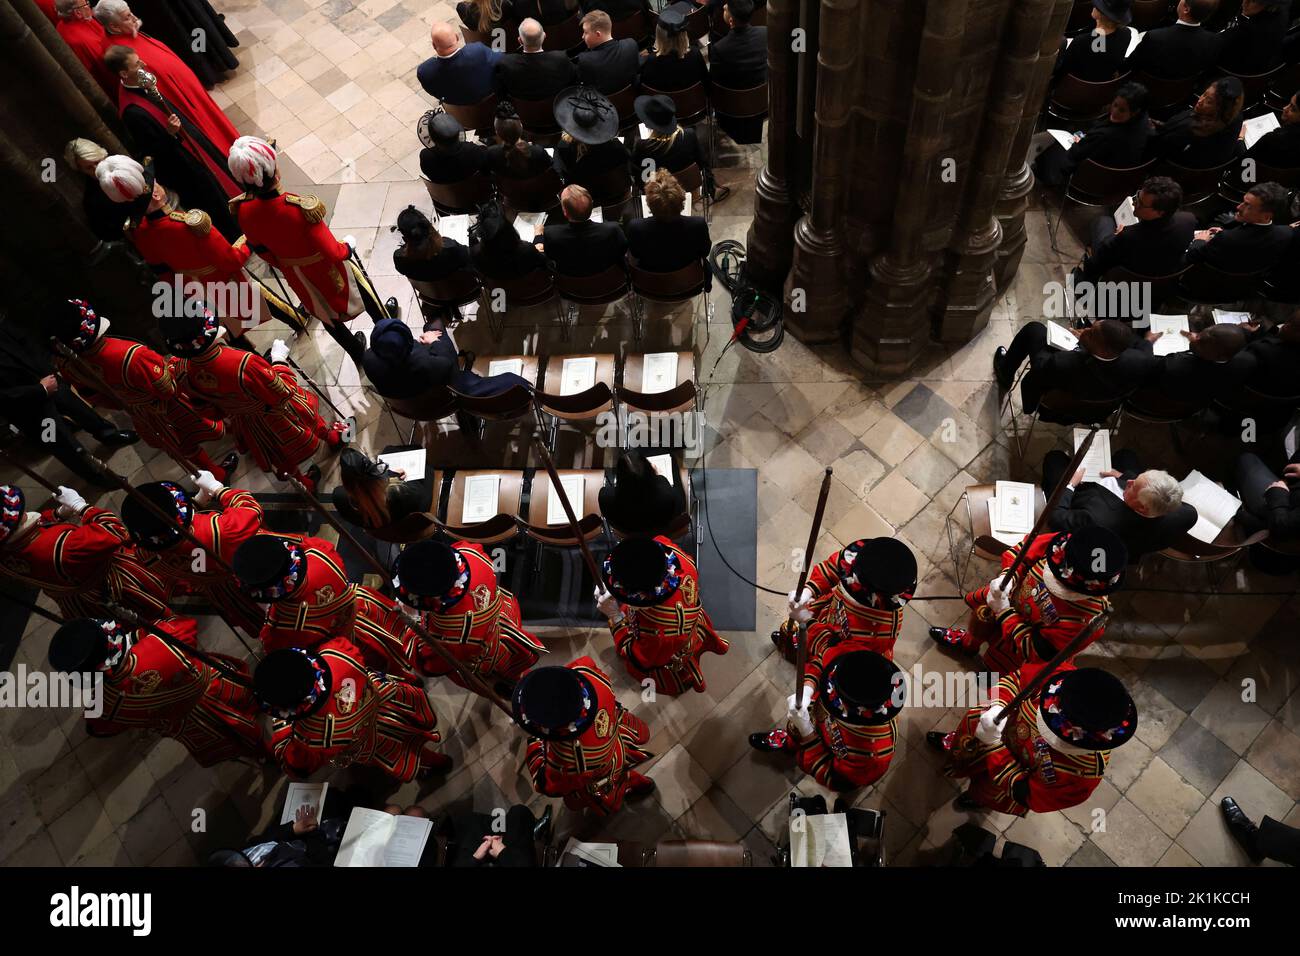 Yeomen Warders bei der State Funeral of Queen Elizabeth II, die in Westminster Abbey, London, stattfand. Bilddatum: Montag, 19. September 2022. Stockfoto